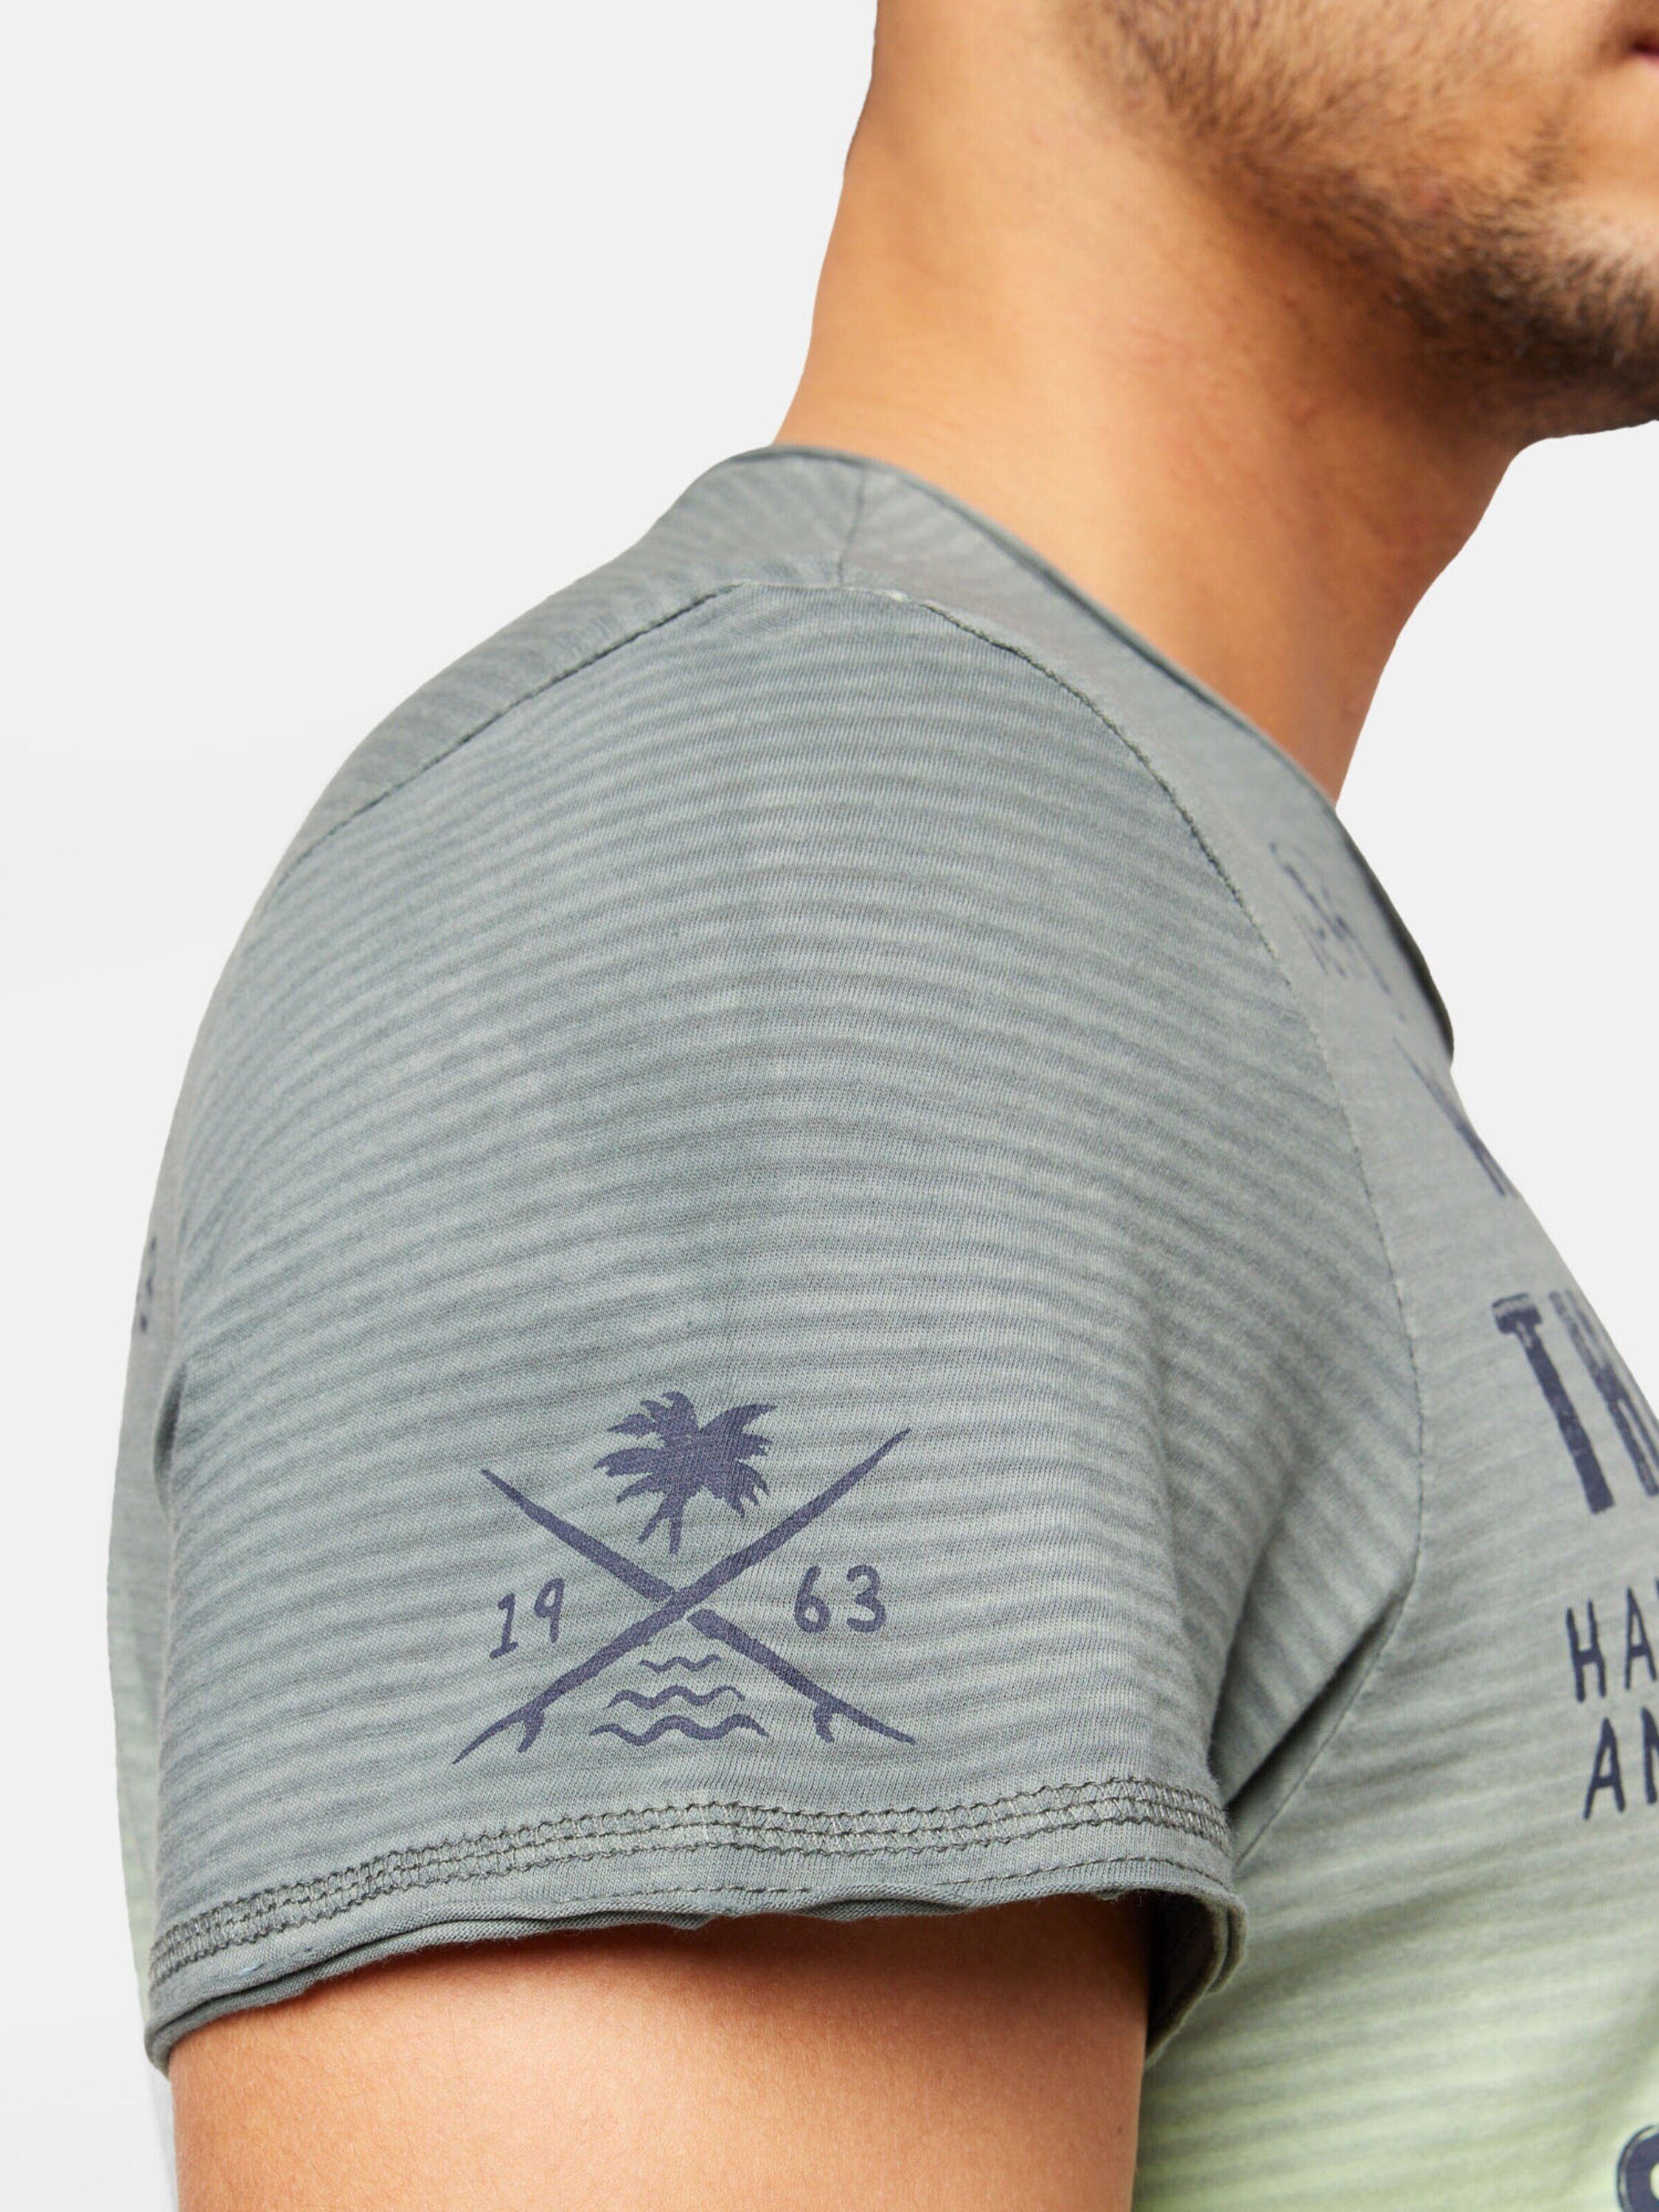 CAMP DAVID grey (1-tlg) surf T-Shirt